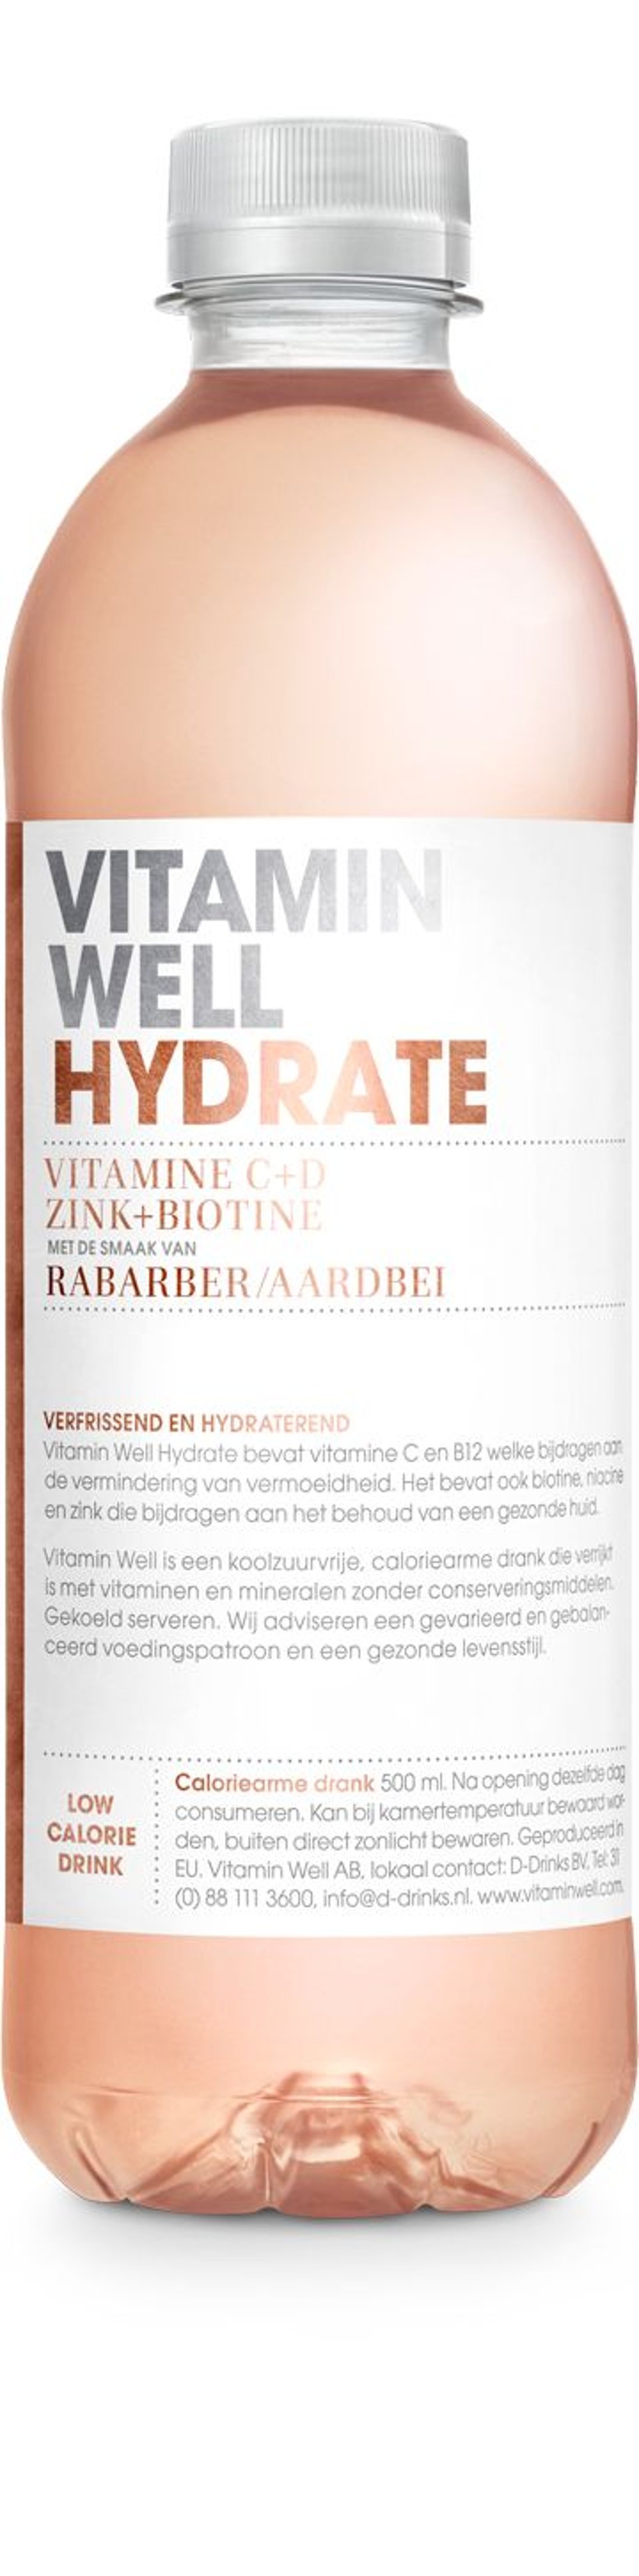 Vitamin Well: HYDRATE RABARBER/AARDBEI